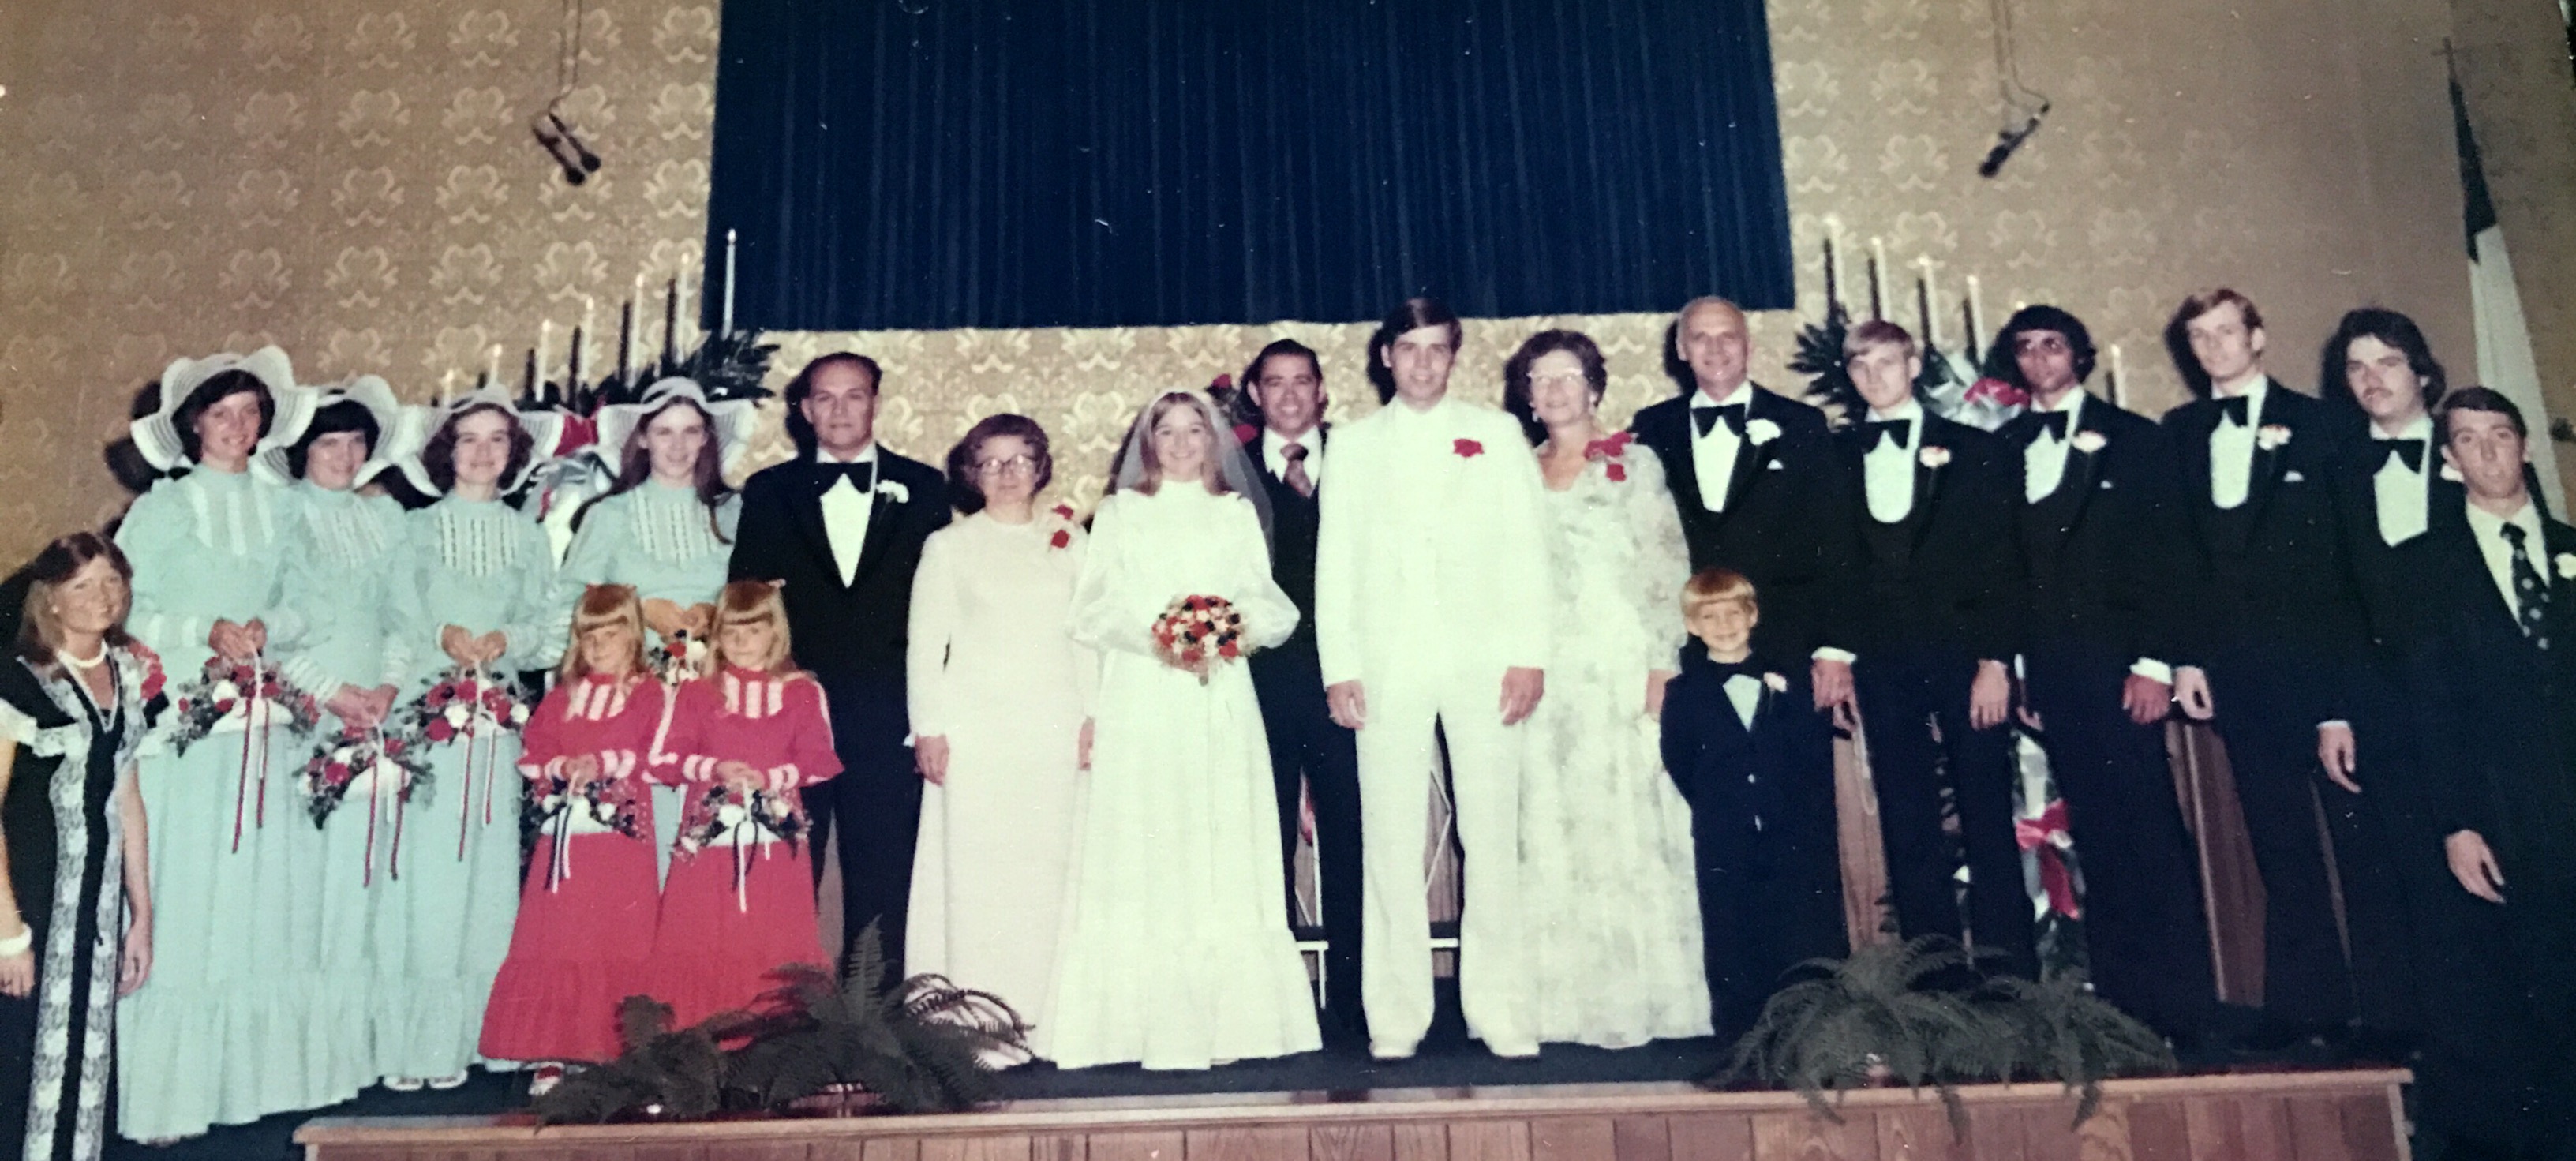 June 19 1976. Bob and Anita Wedding